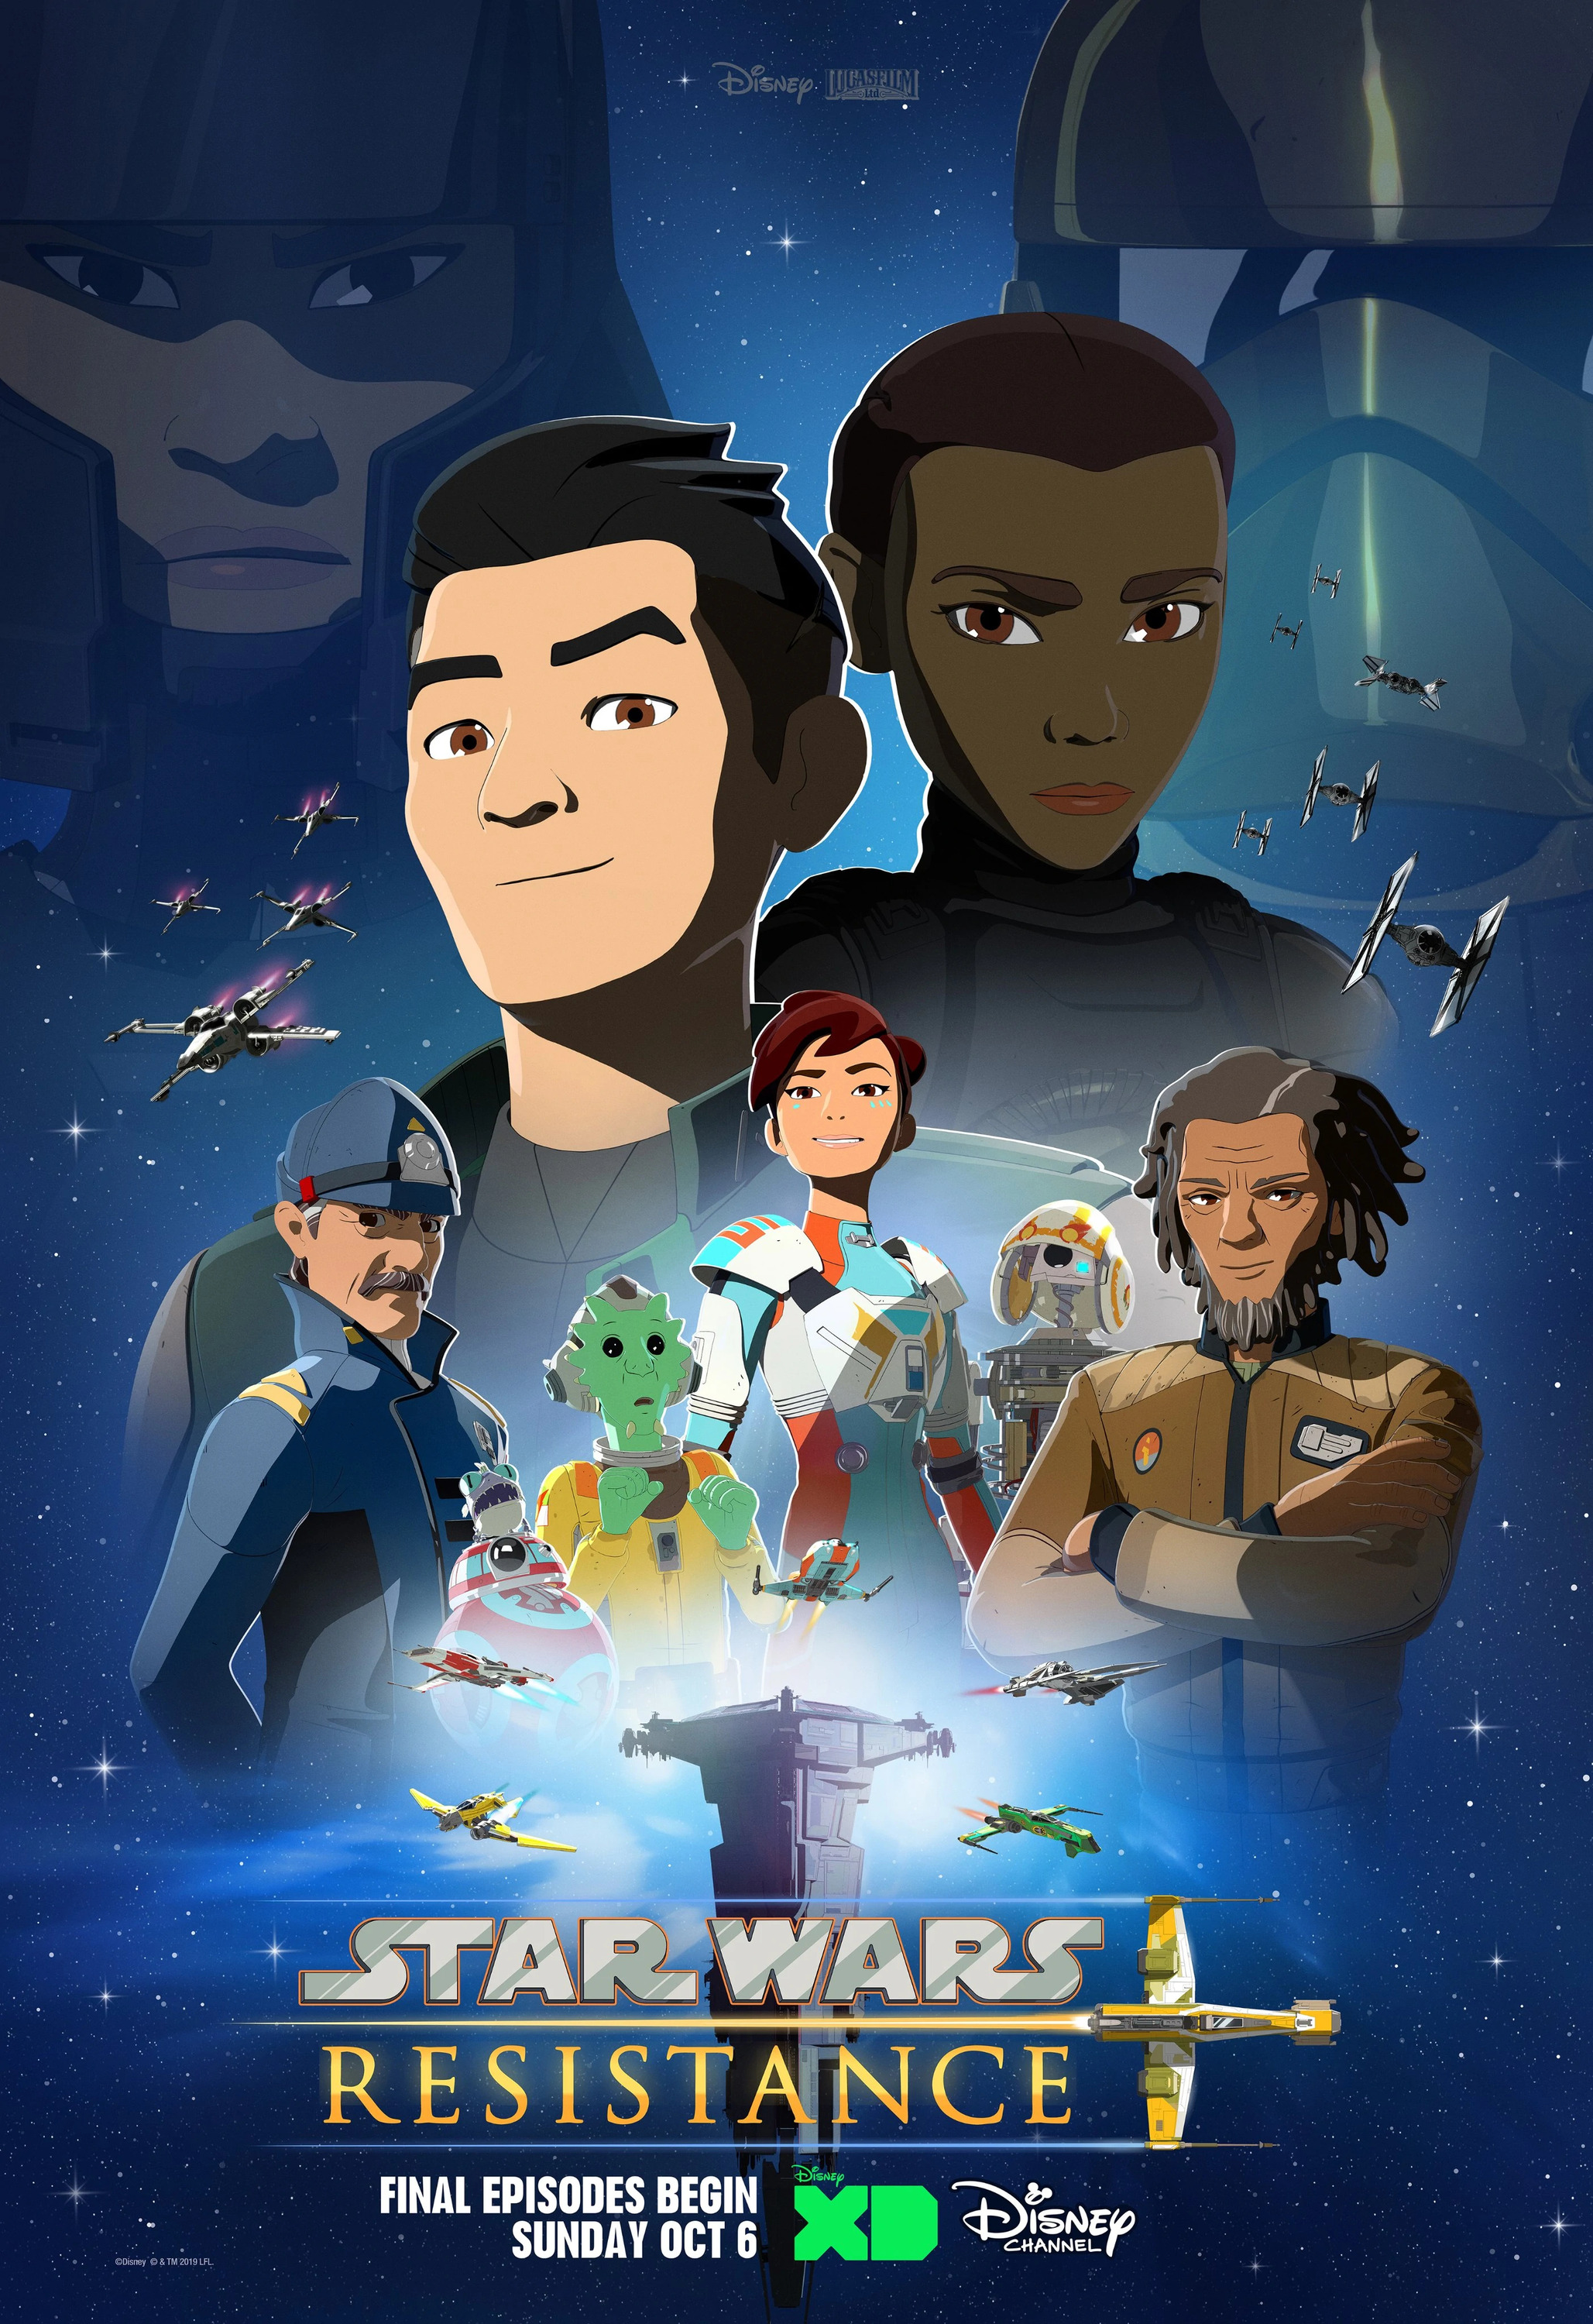 Mega Sized Movie Poster Image for Star Wars Resistance (#2 of 2)